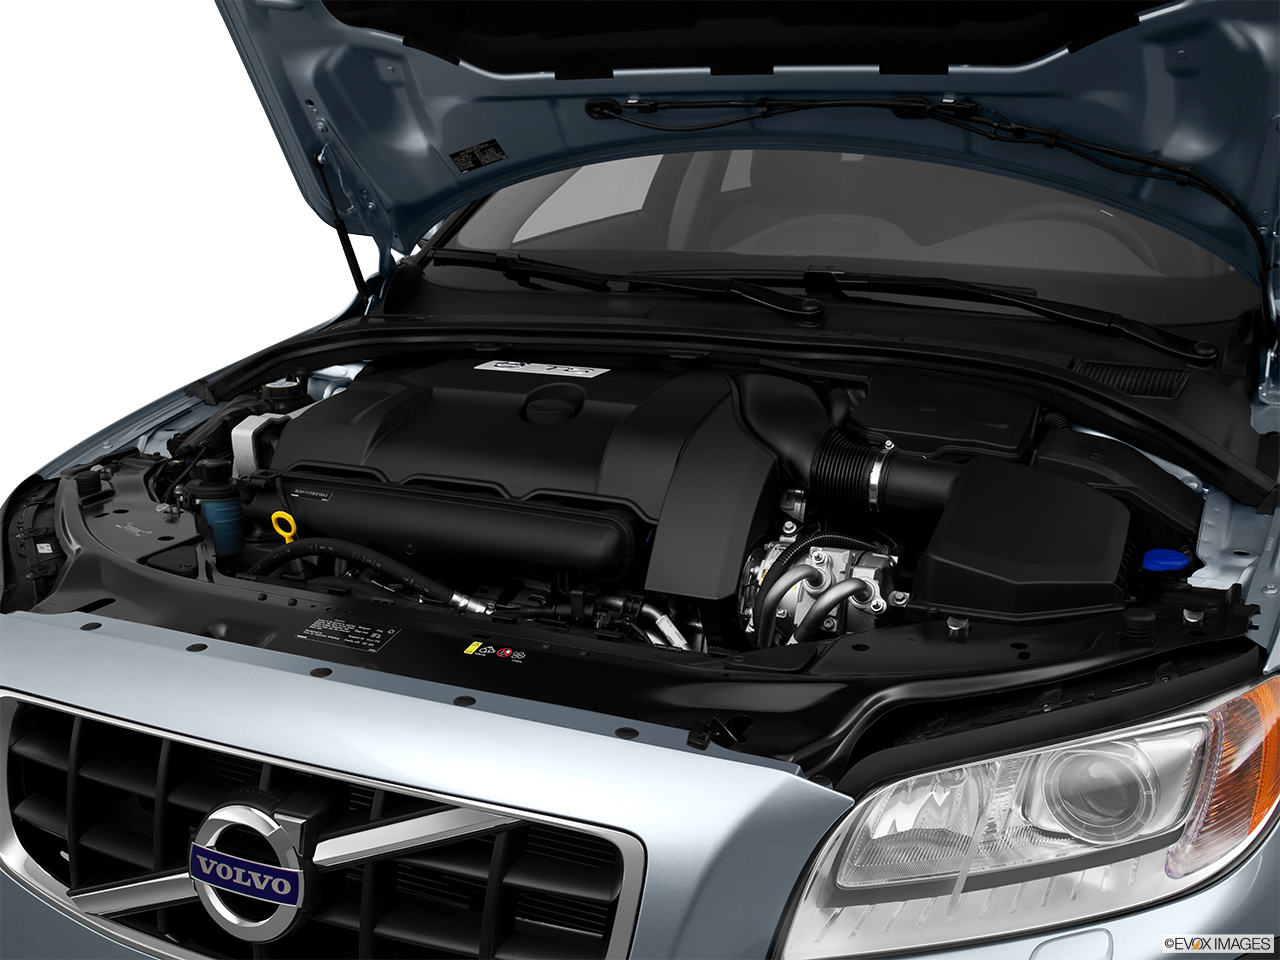 2013 Volvo XC70 T6 AWD Platinum Engine. 